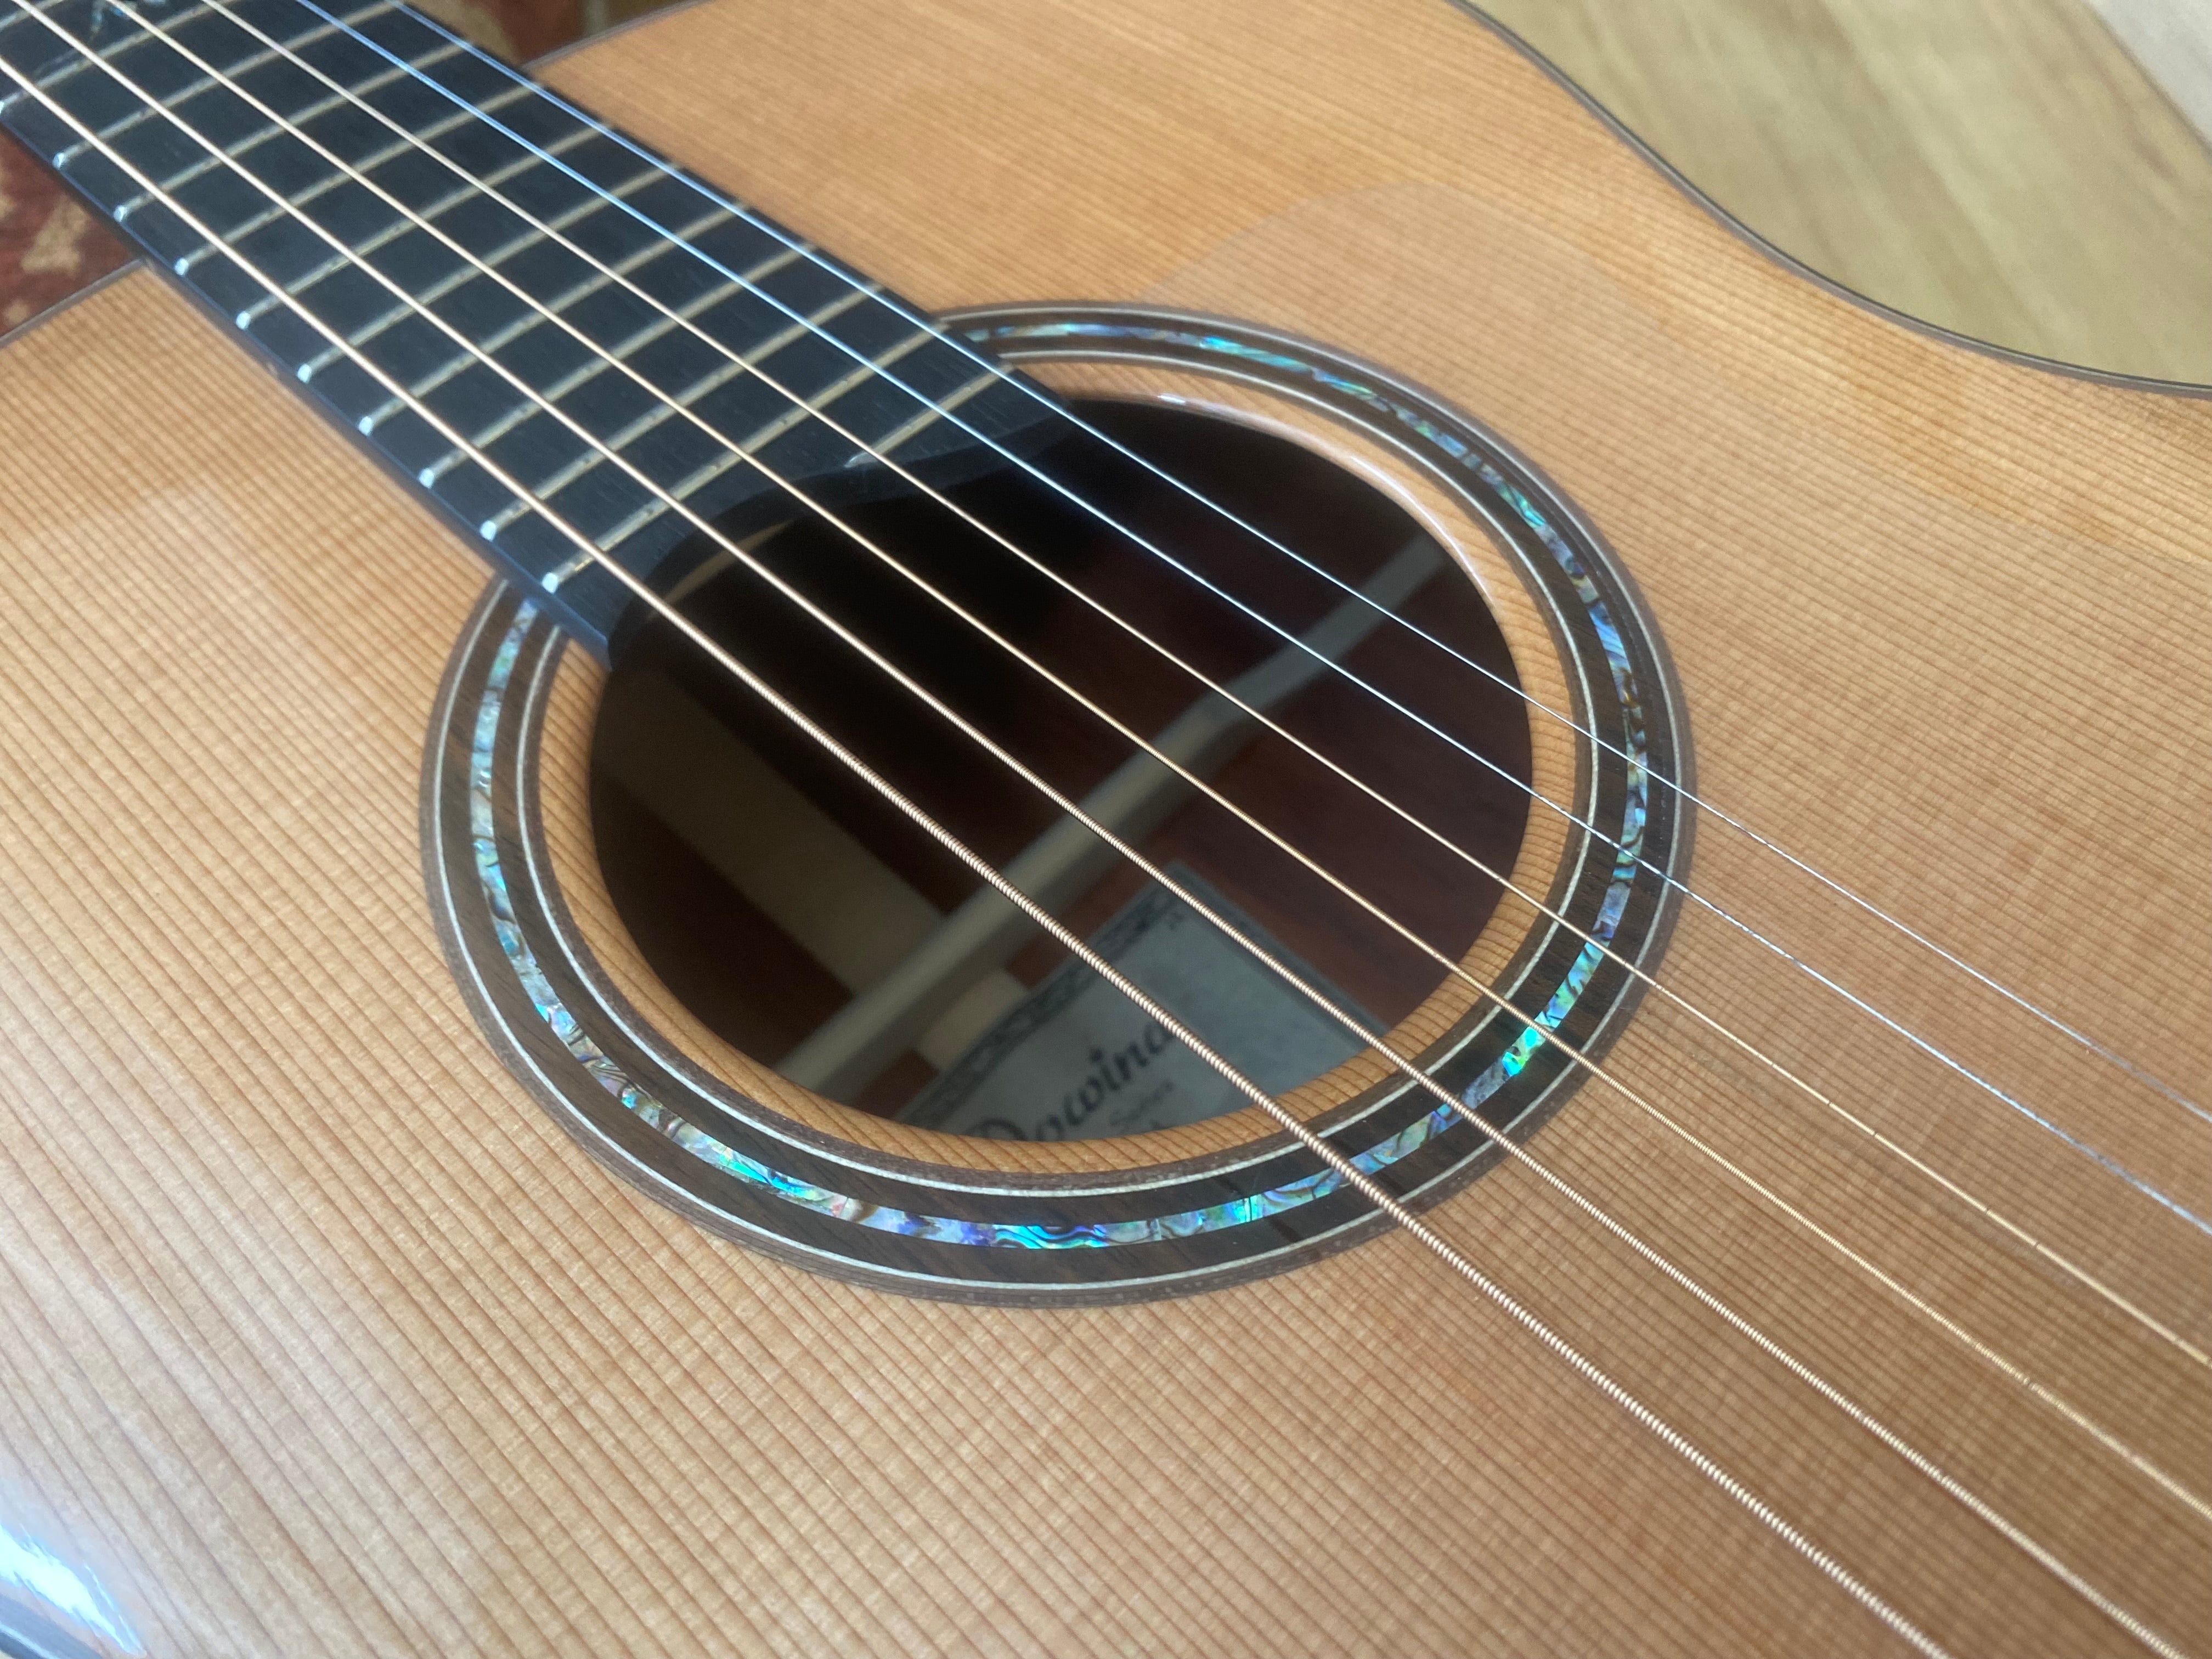 Dowina Merlot GA / Macacauba Acoustic Guitar, Acoustic Guitar for sale at Richards Guitars.